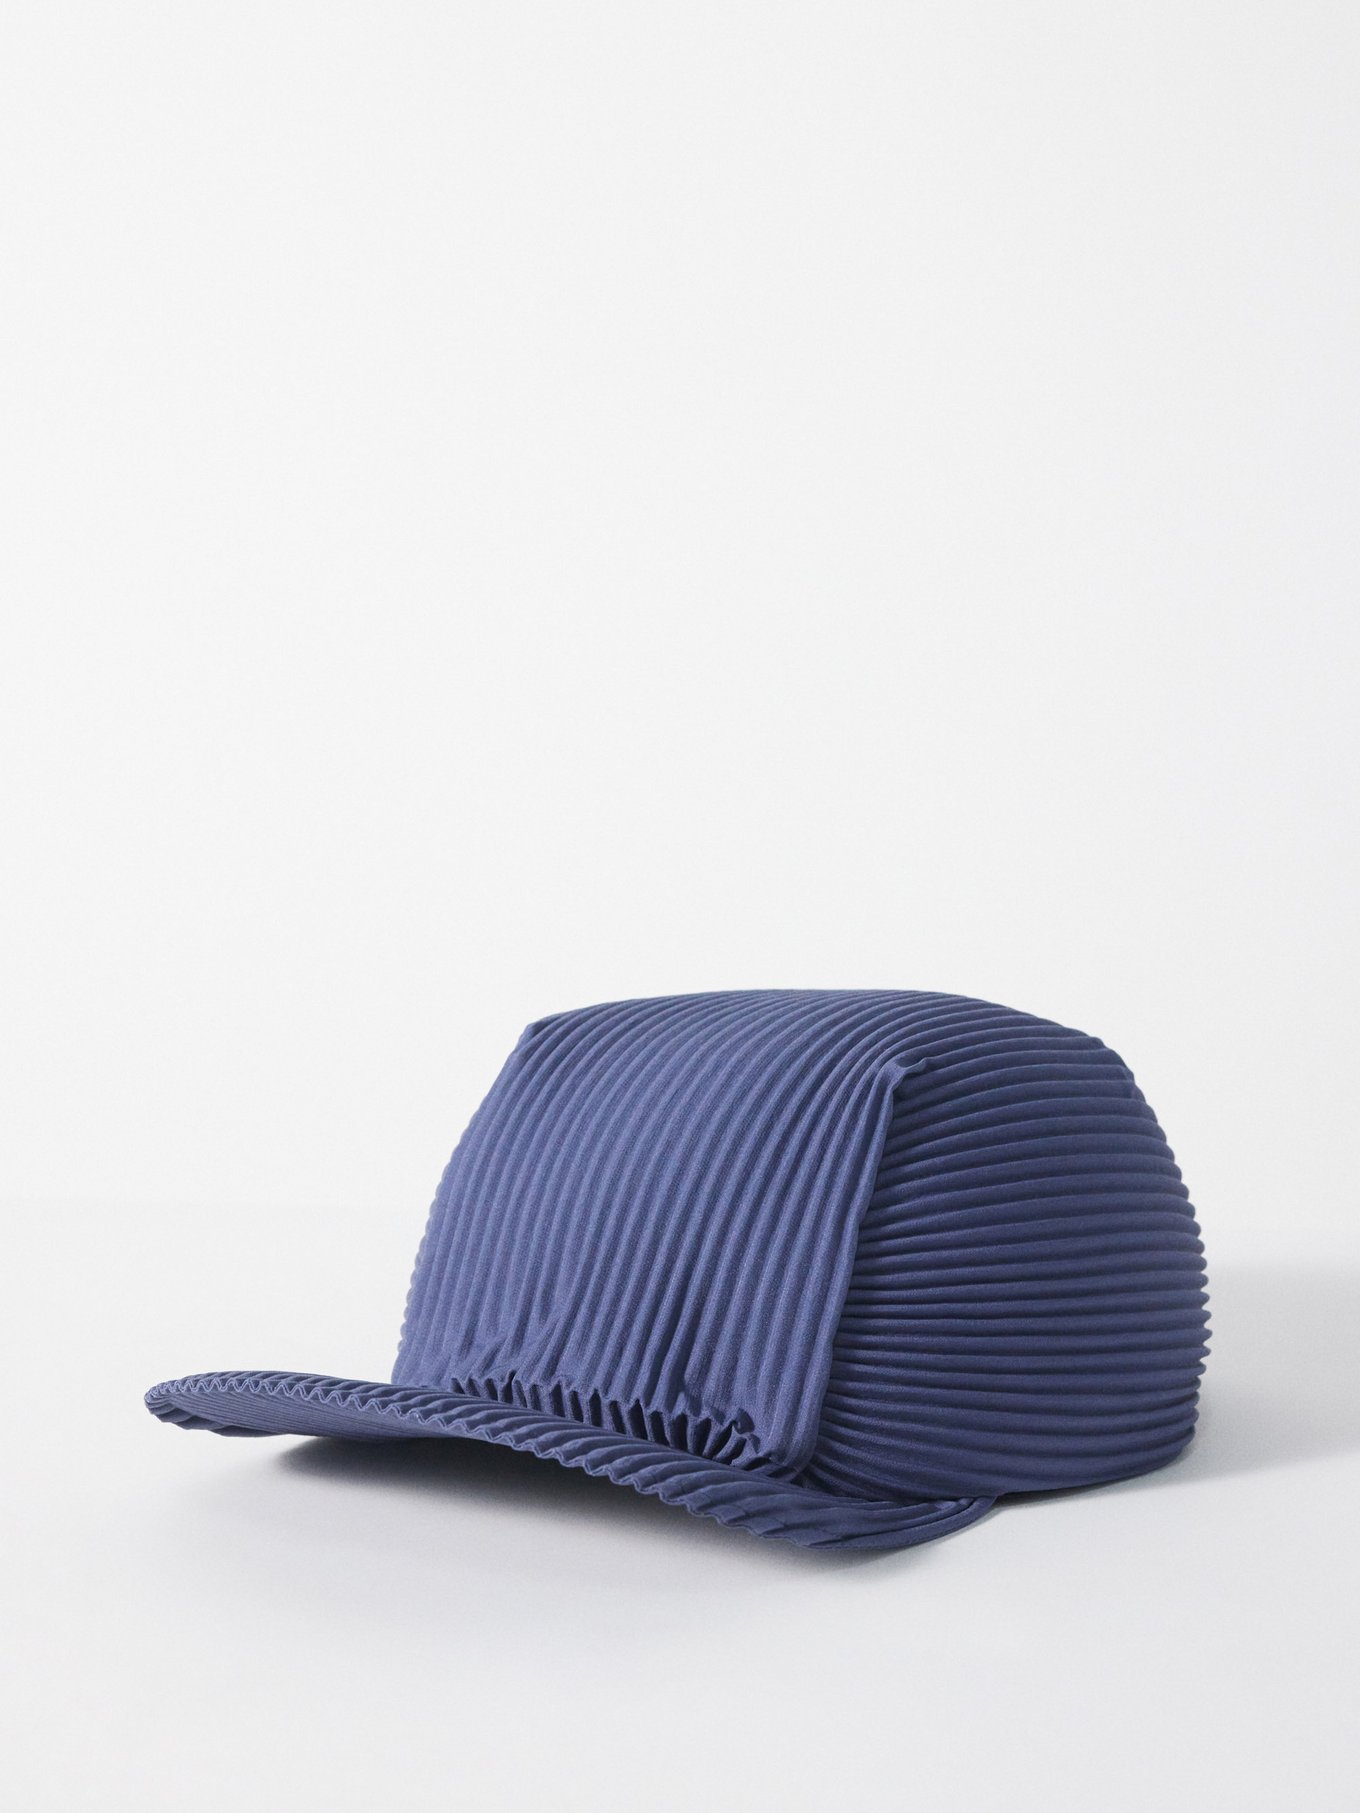 Blue Technical-pleated baseball cap | Homme Plissé Issey Miyake